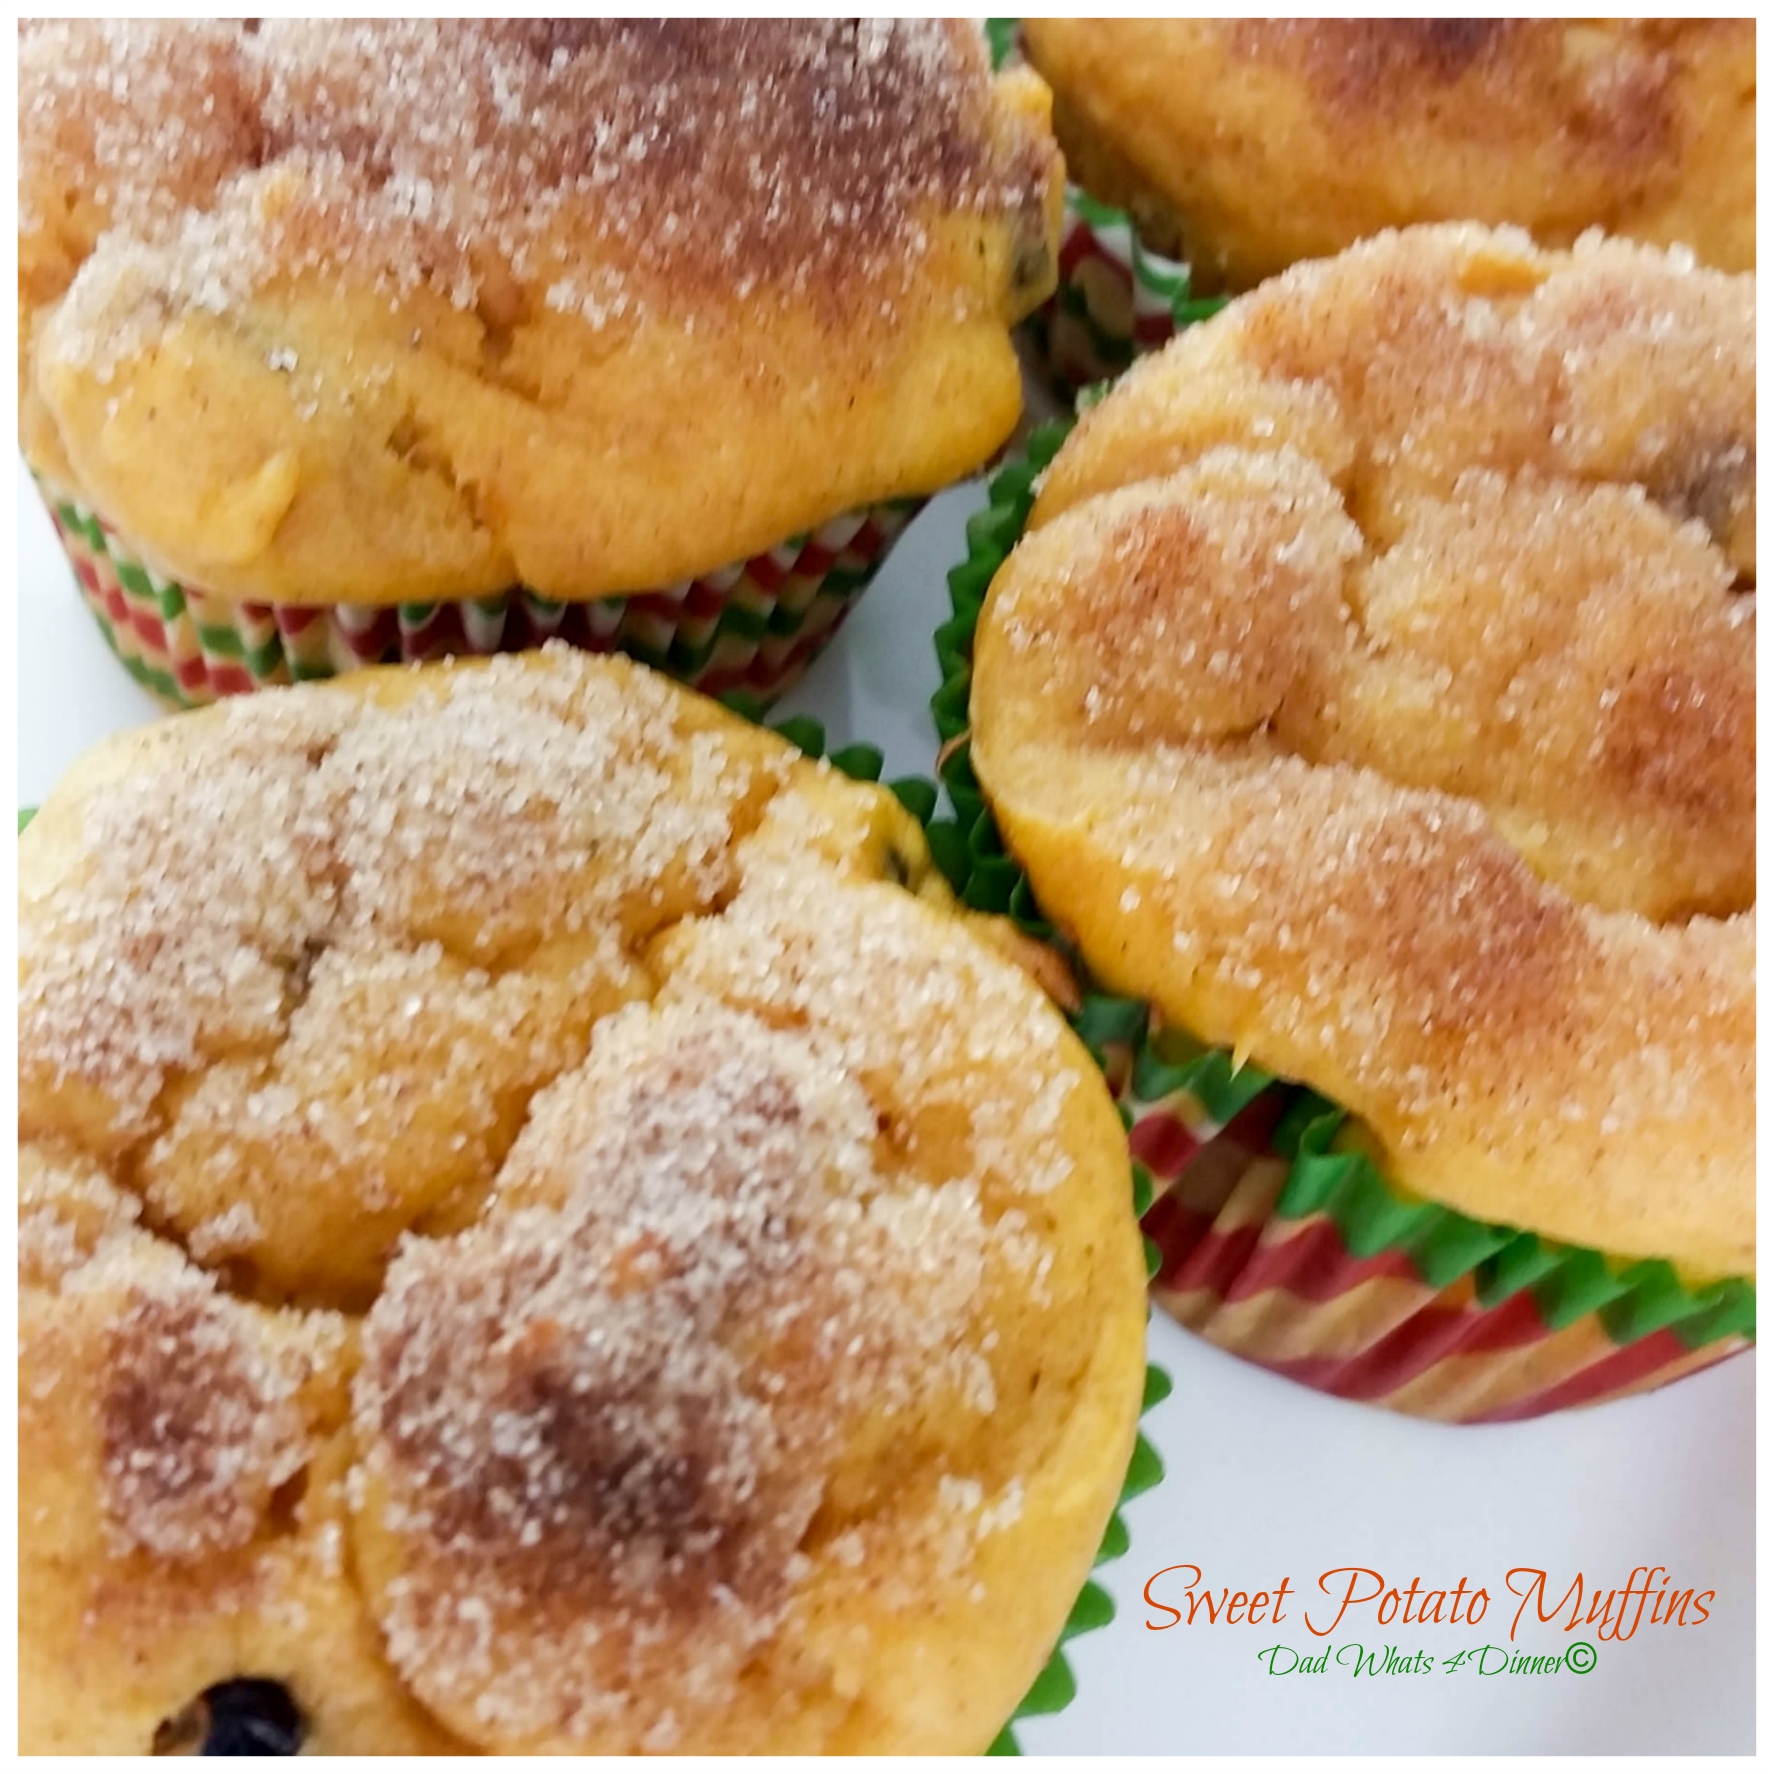 Sweet Potato Muffins DadWhats4Dinner.com©